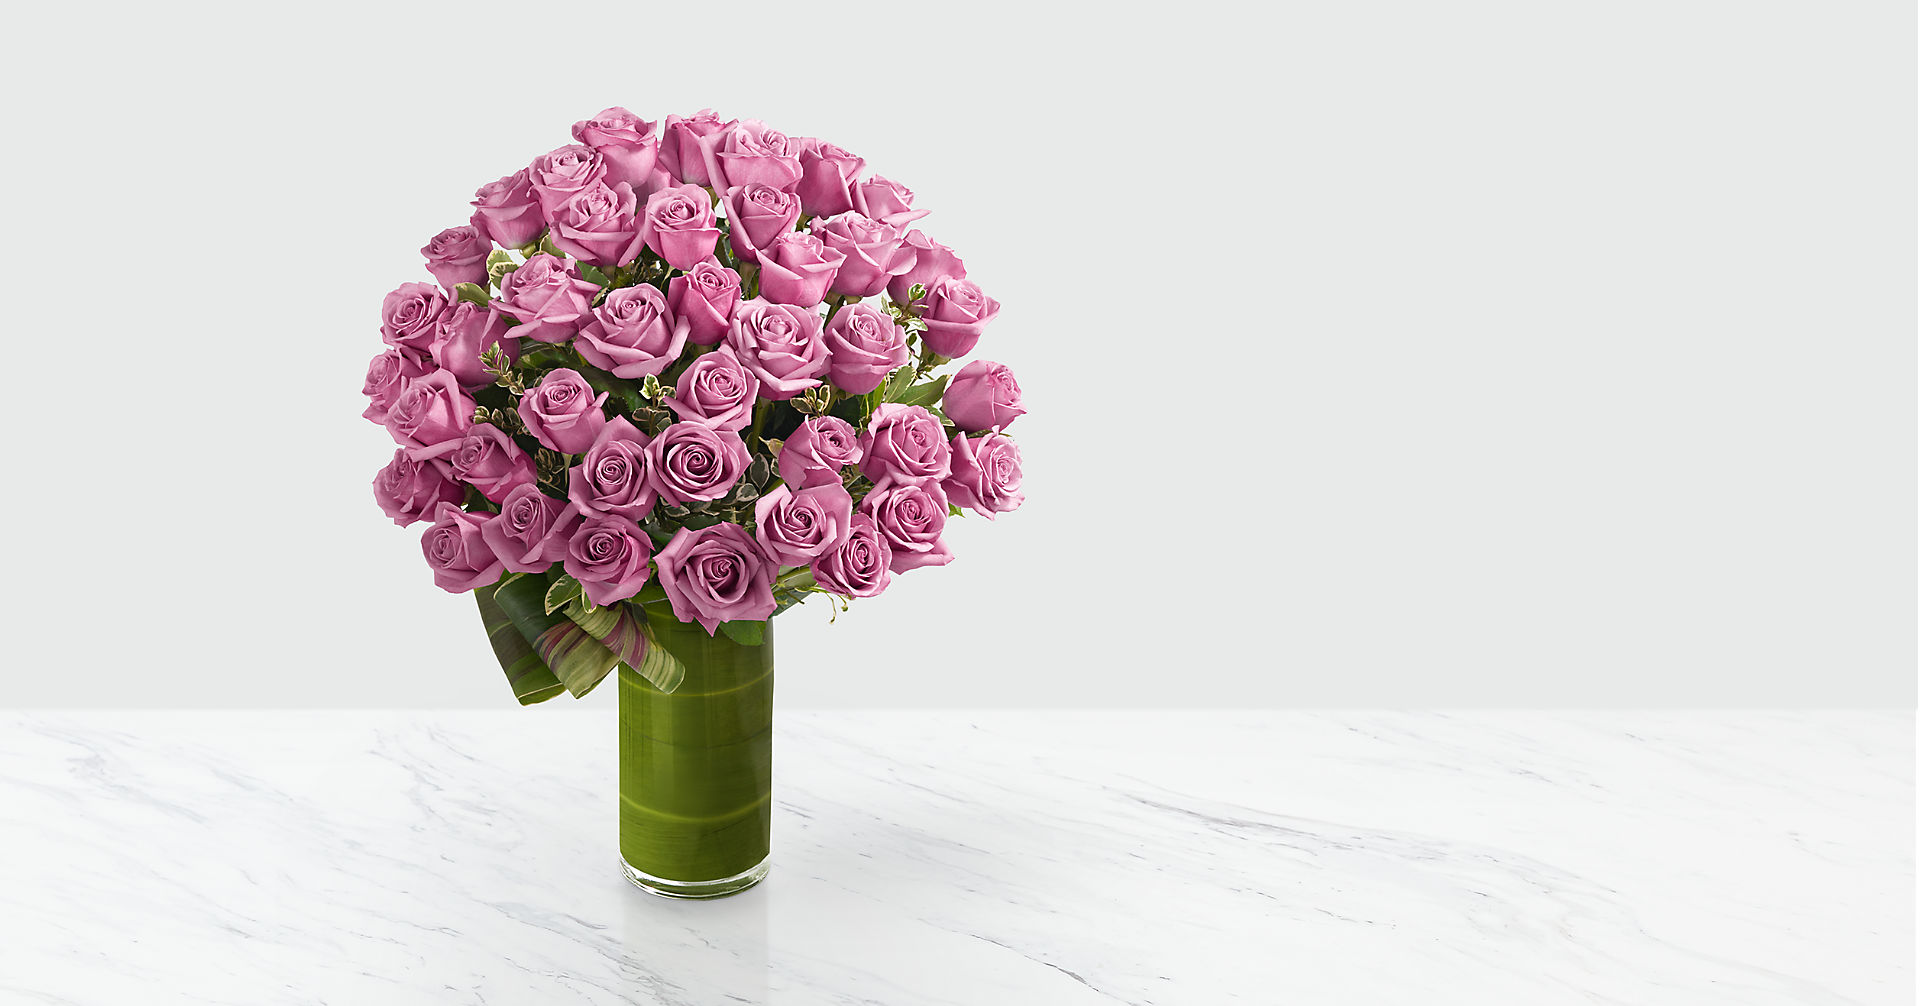 Sensational Luxury Rose Bouquet - 24-inch Premium Long-Stemmed Roses